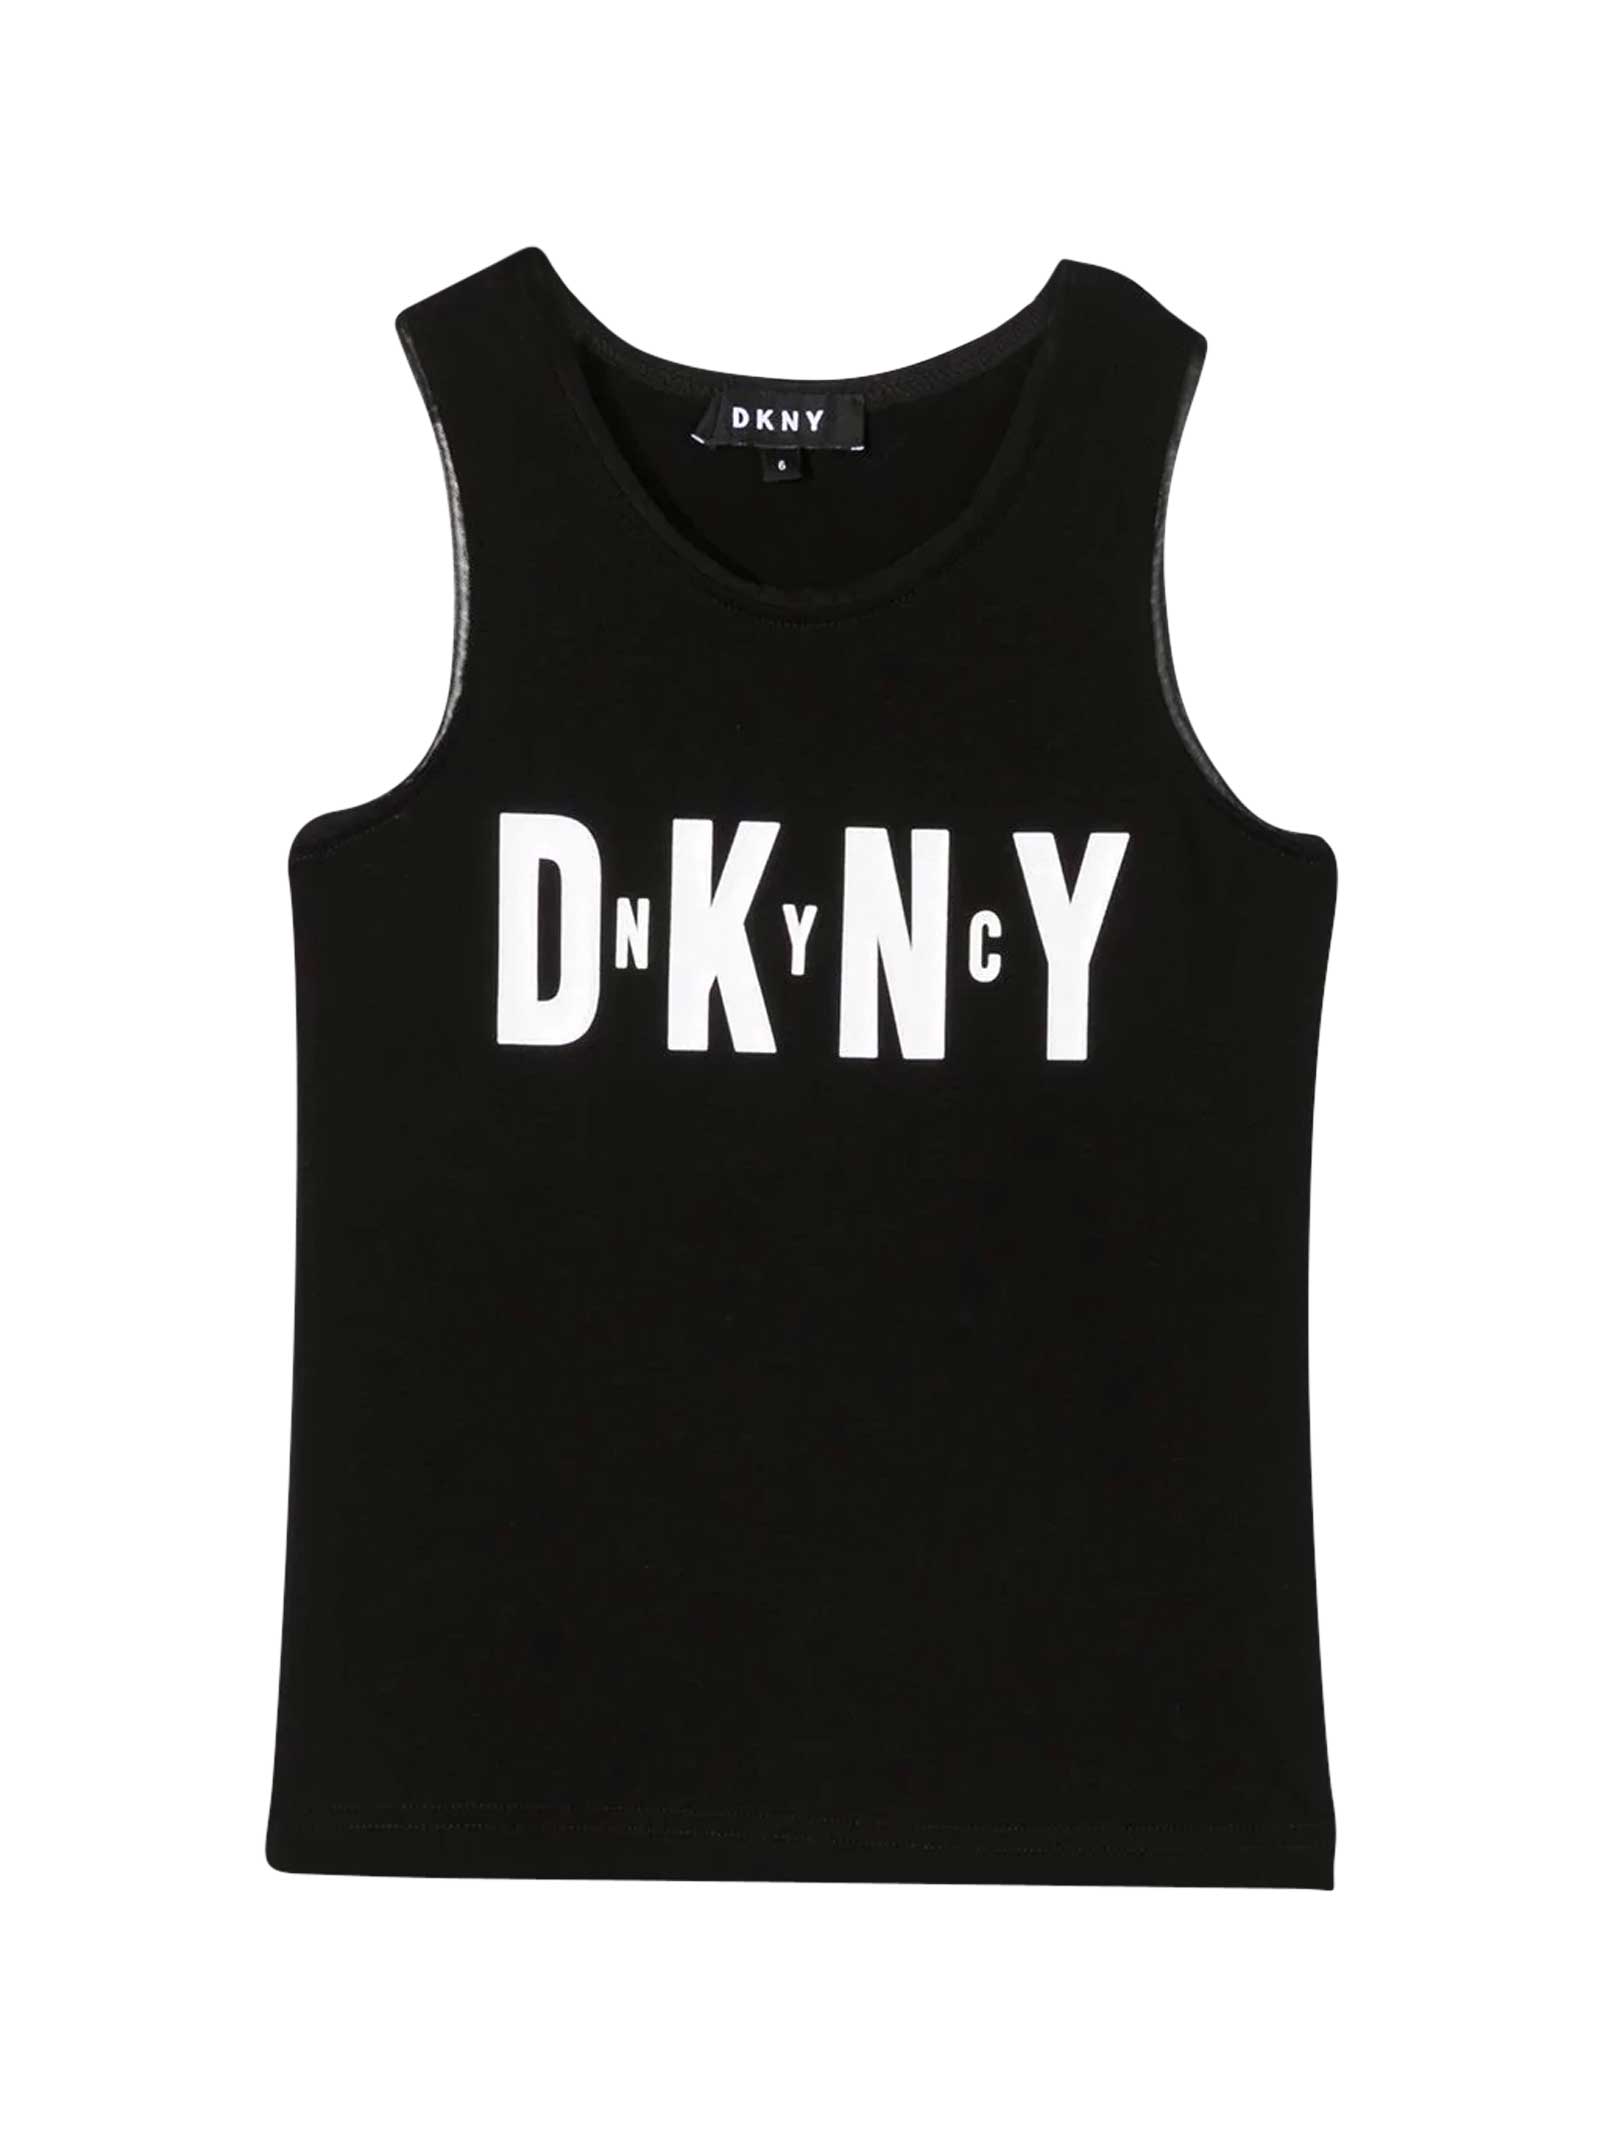 DKNY Black Tank Top